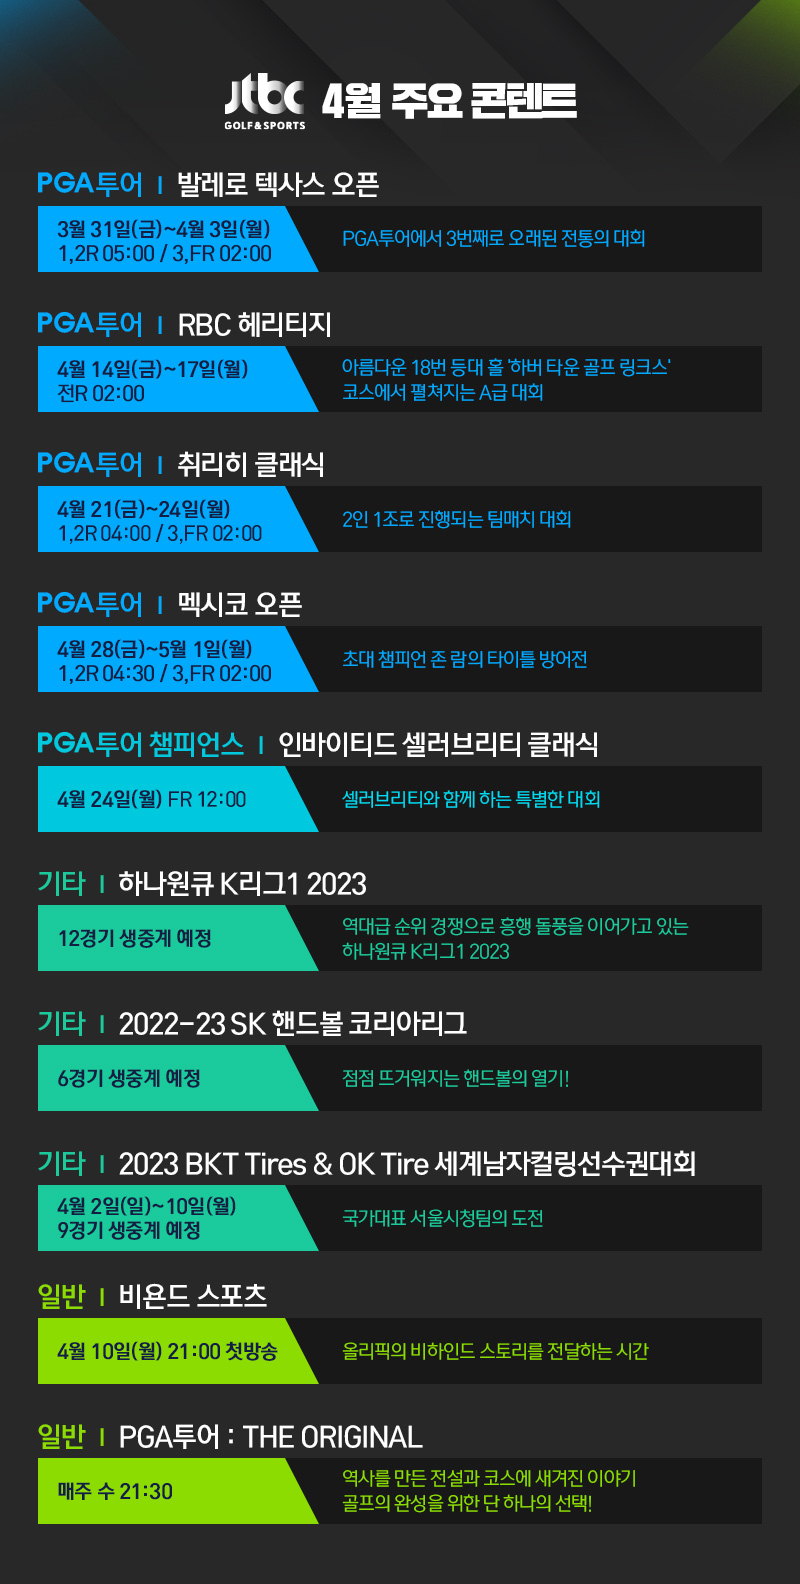 JTBC GOLF&SPORTS 4월 주요 콘텐트